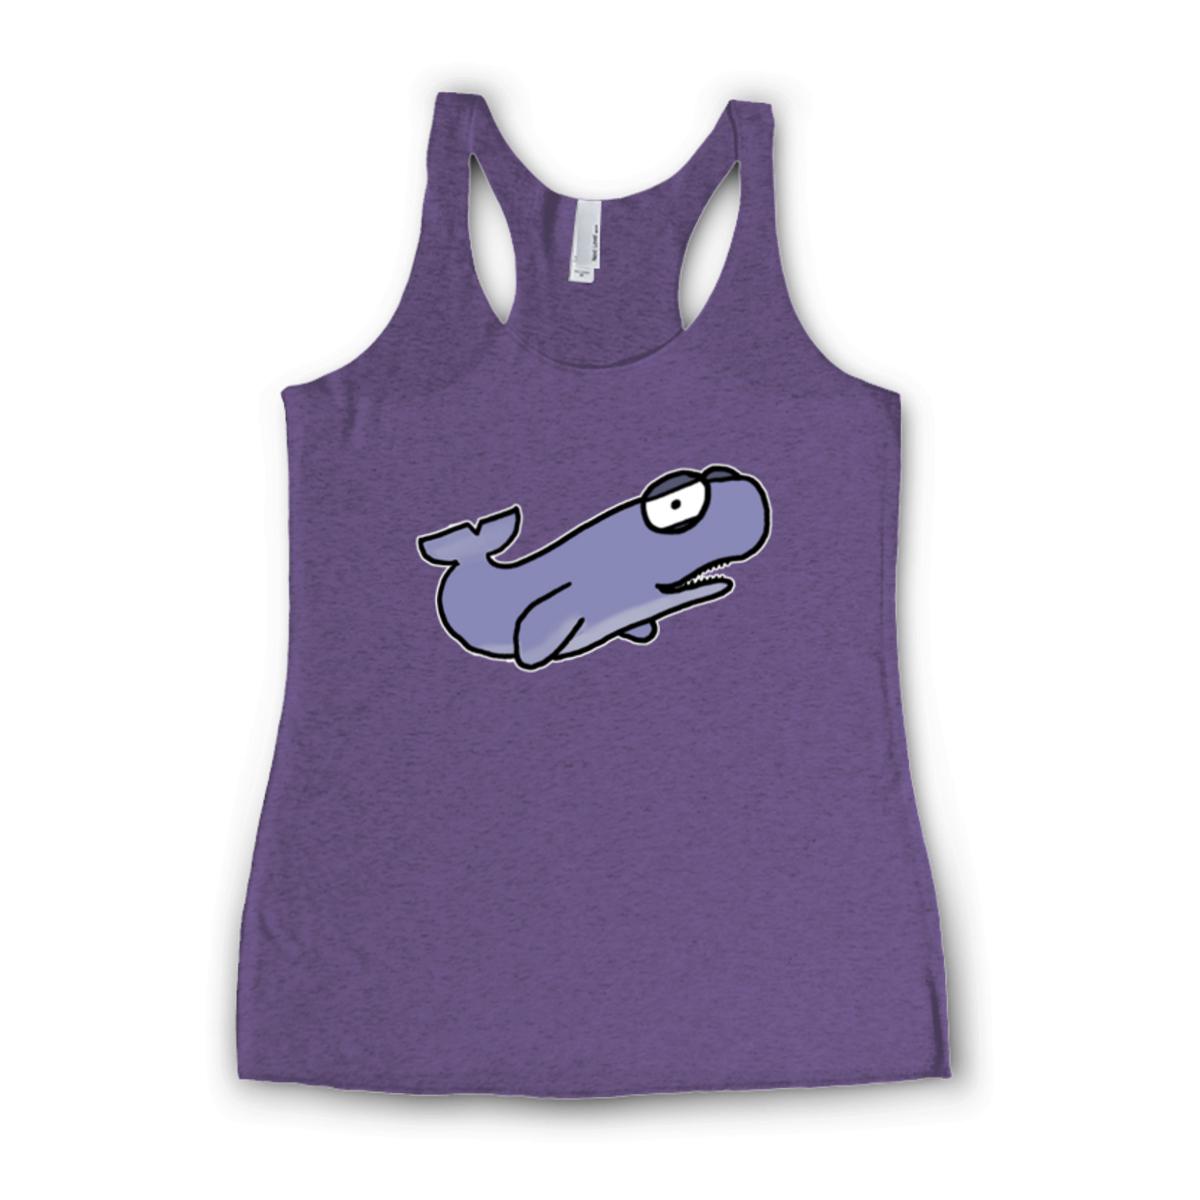 Sperm Whale Ladies' Racerback Tank Small purple-rush